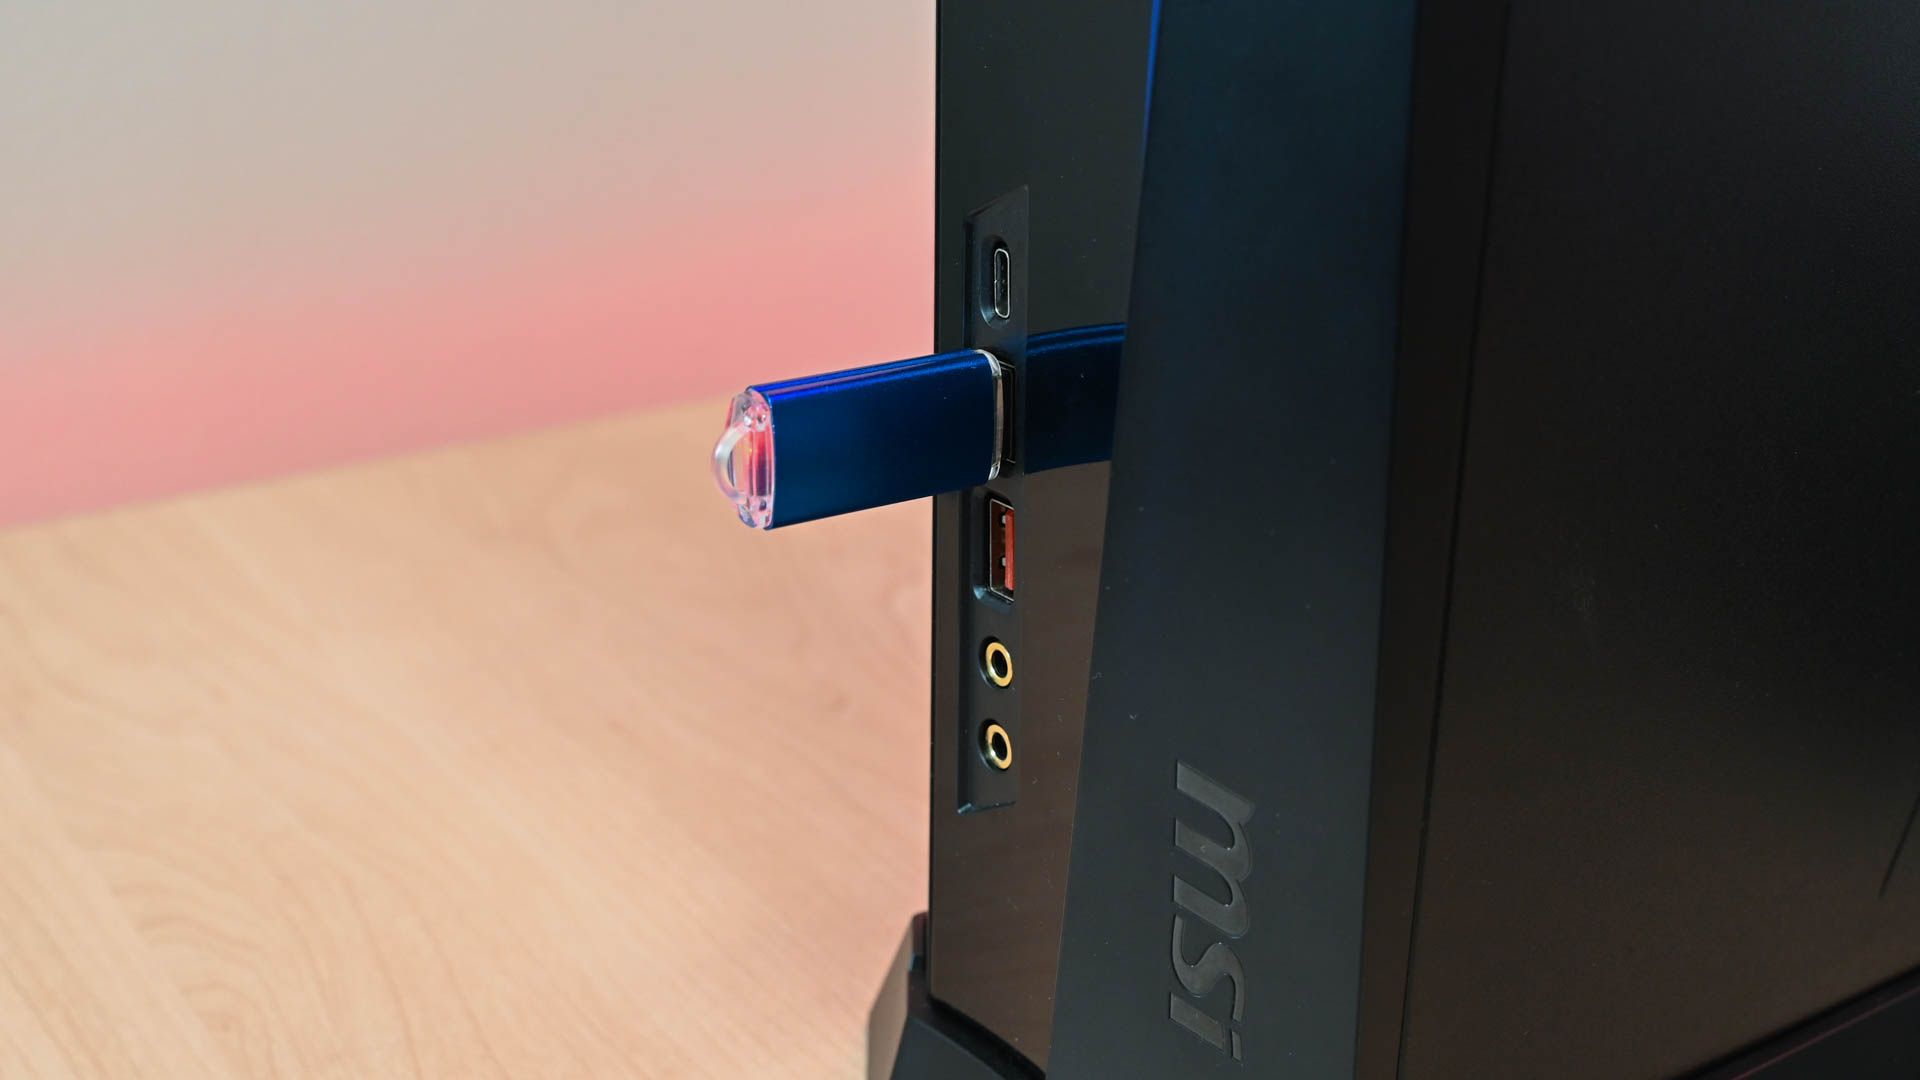 A USB drive plugged into a Windows PC. 